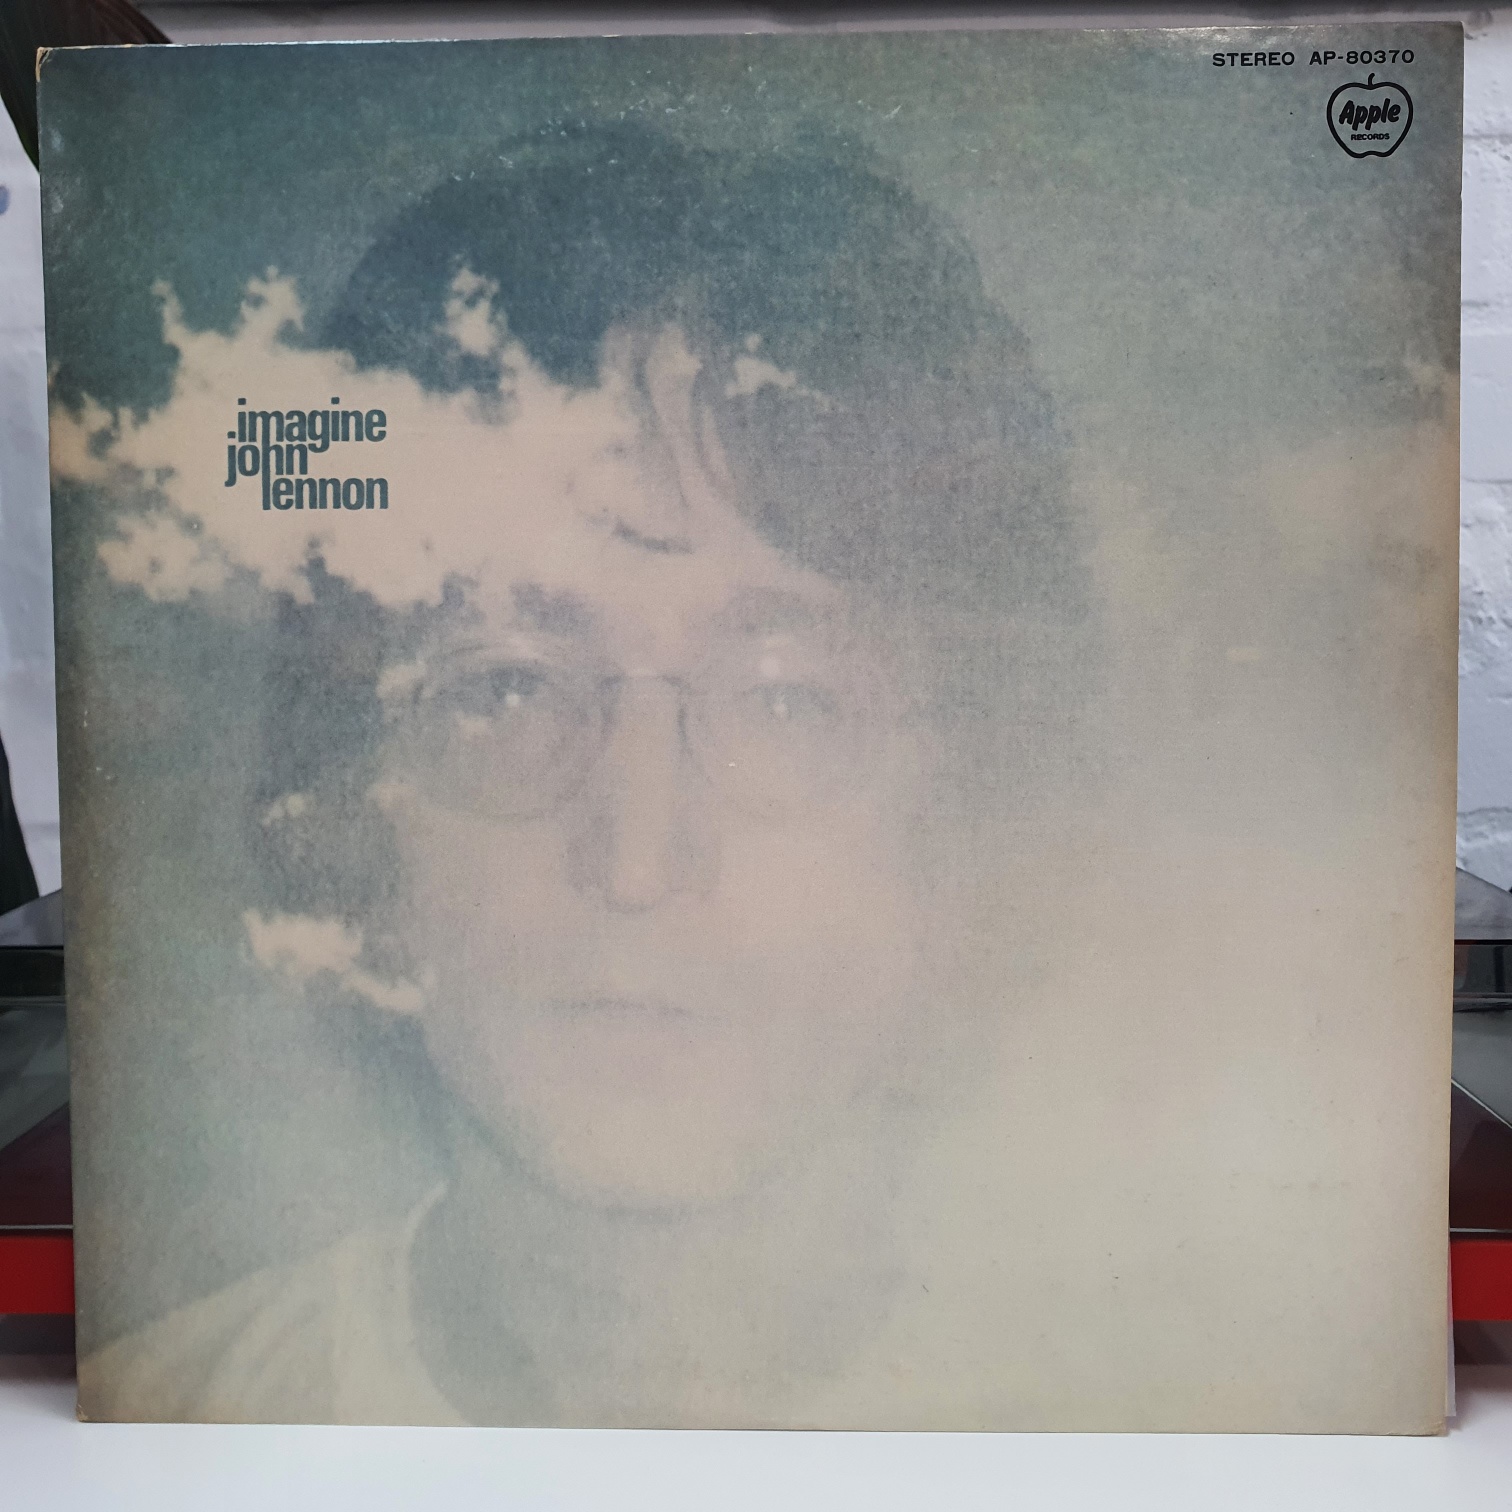 Imagine (John Lennon album) - Wikipedia